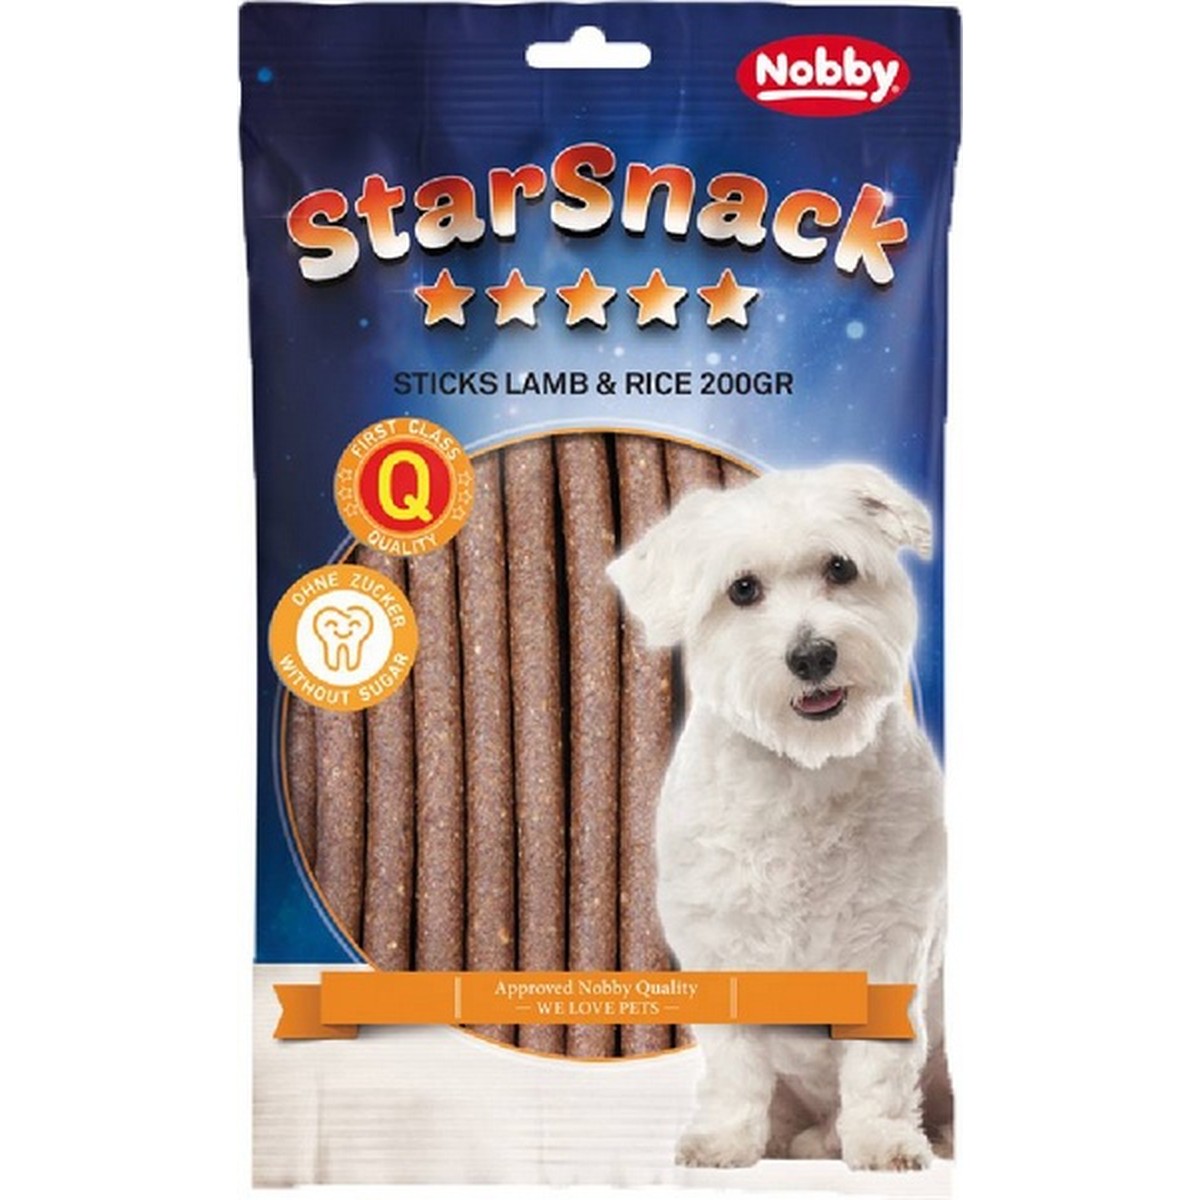   StarSnack Sticks Lamb & Rice  200 g